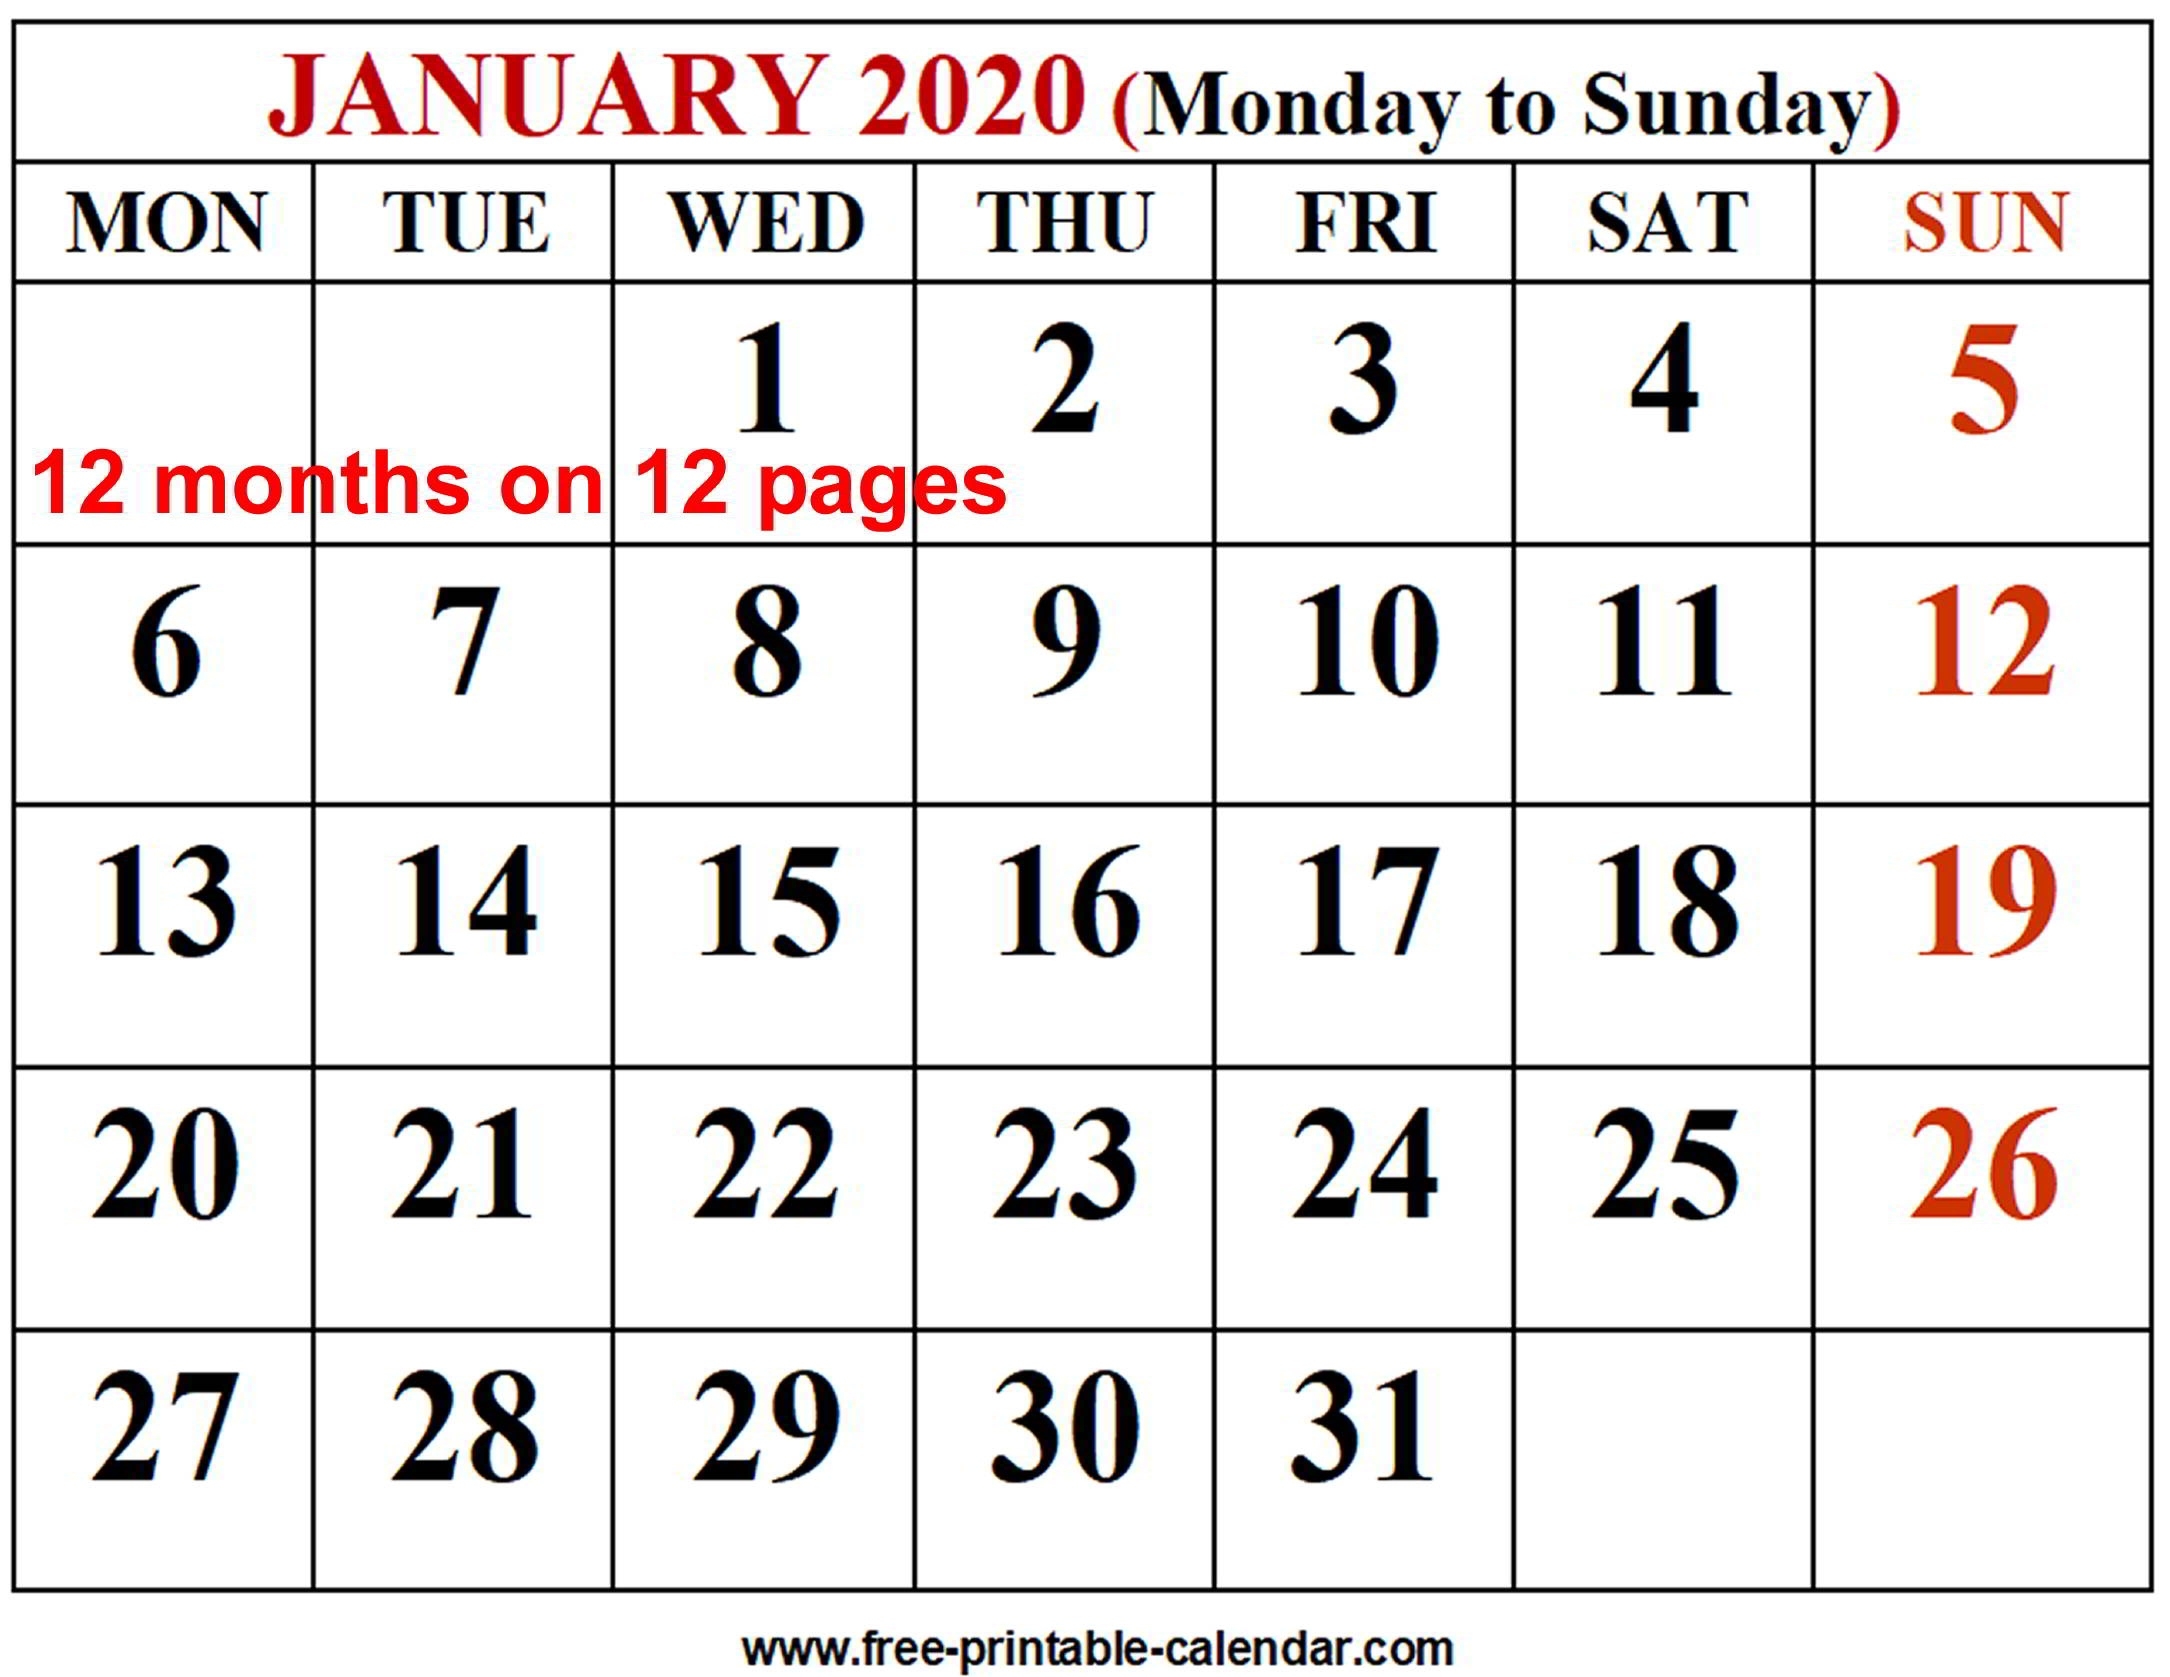 2020 Calendar Template - Free-Printable-Calendar Extraordinary Free 2020 Calendar With Note 12 Pages